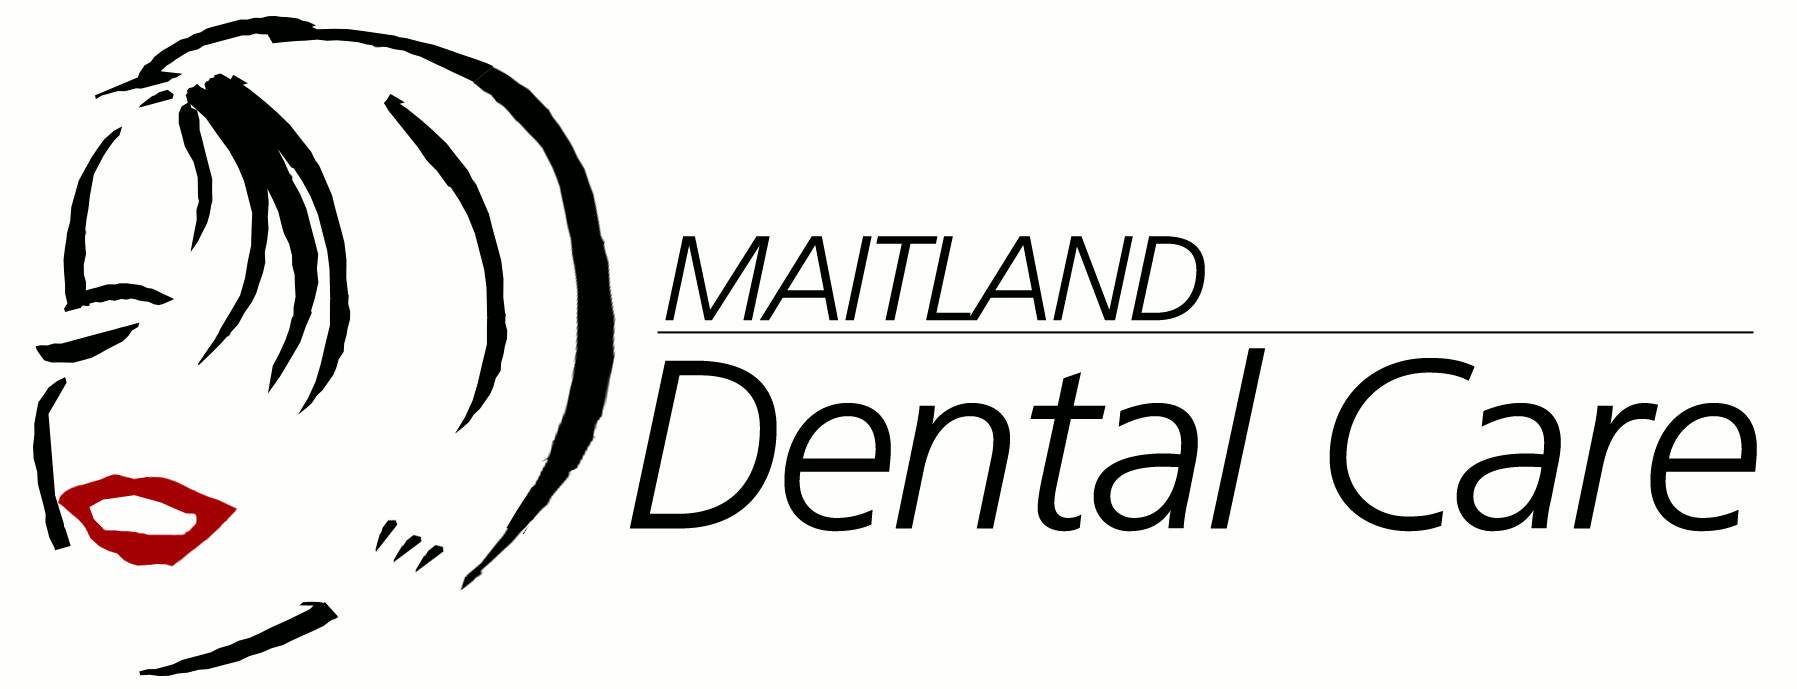 Maitland Dental Care— Your Compassionate Dentists